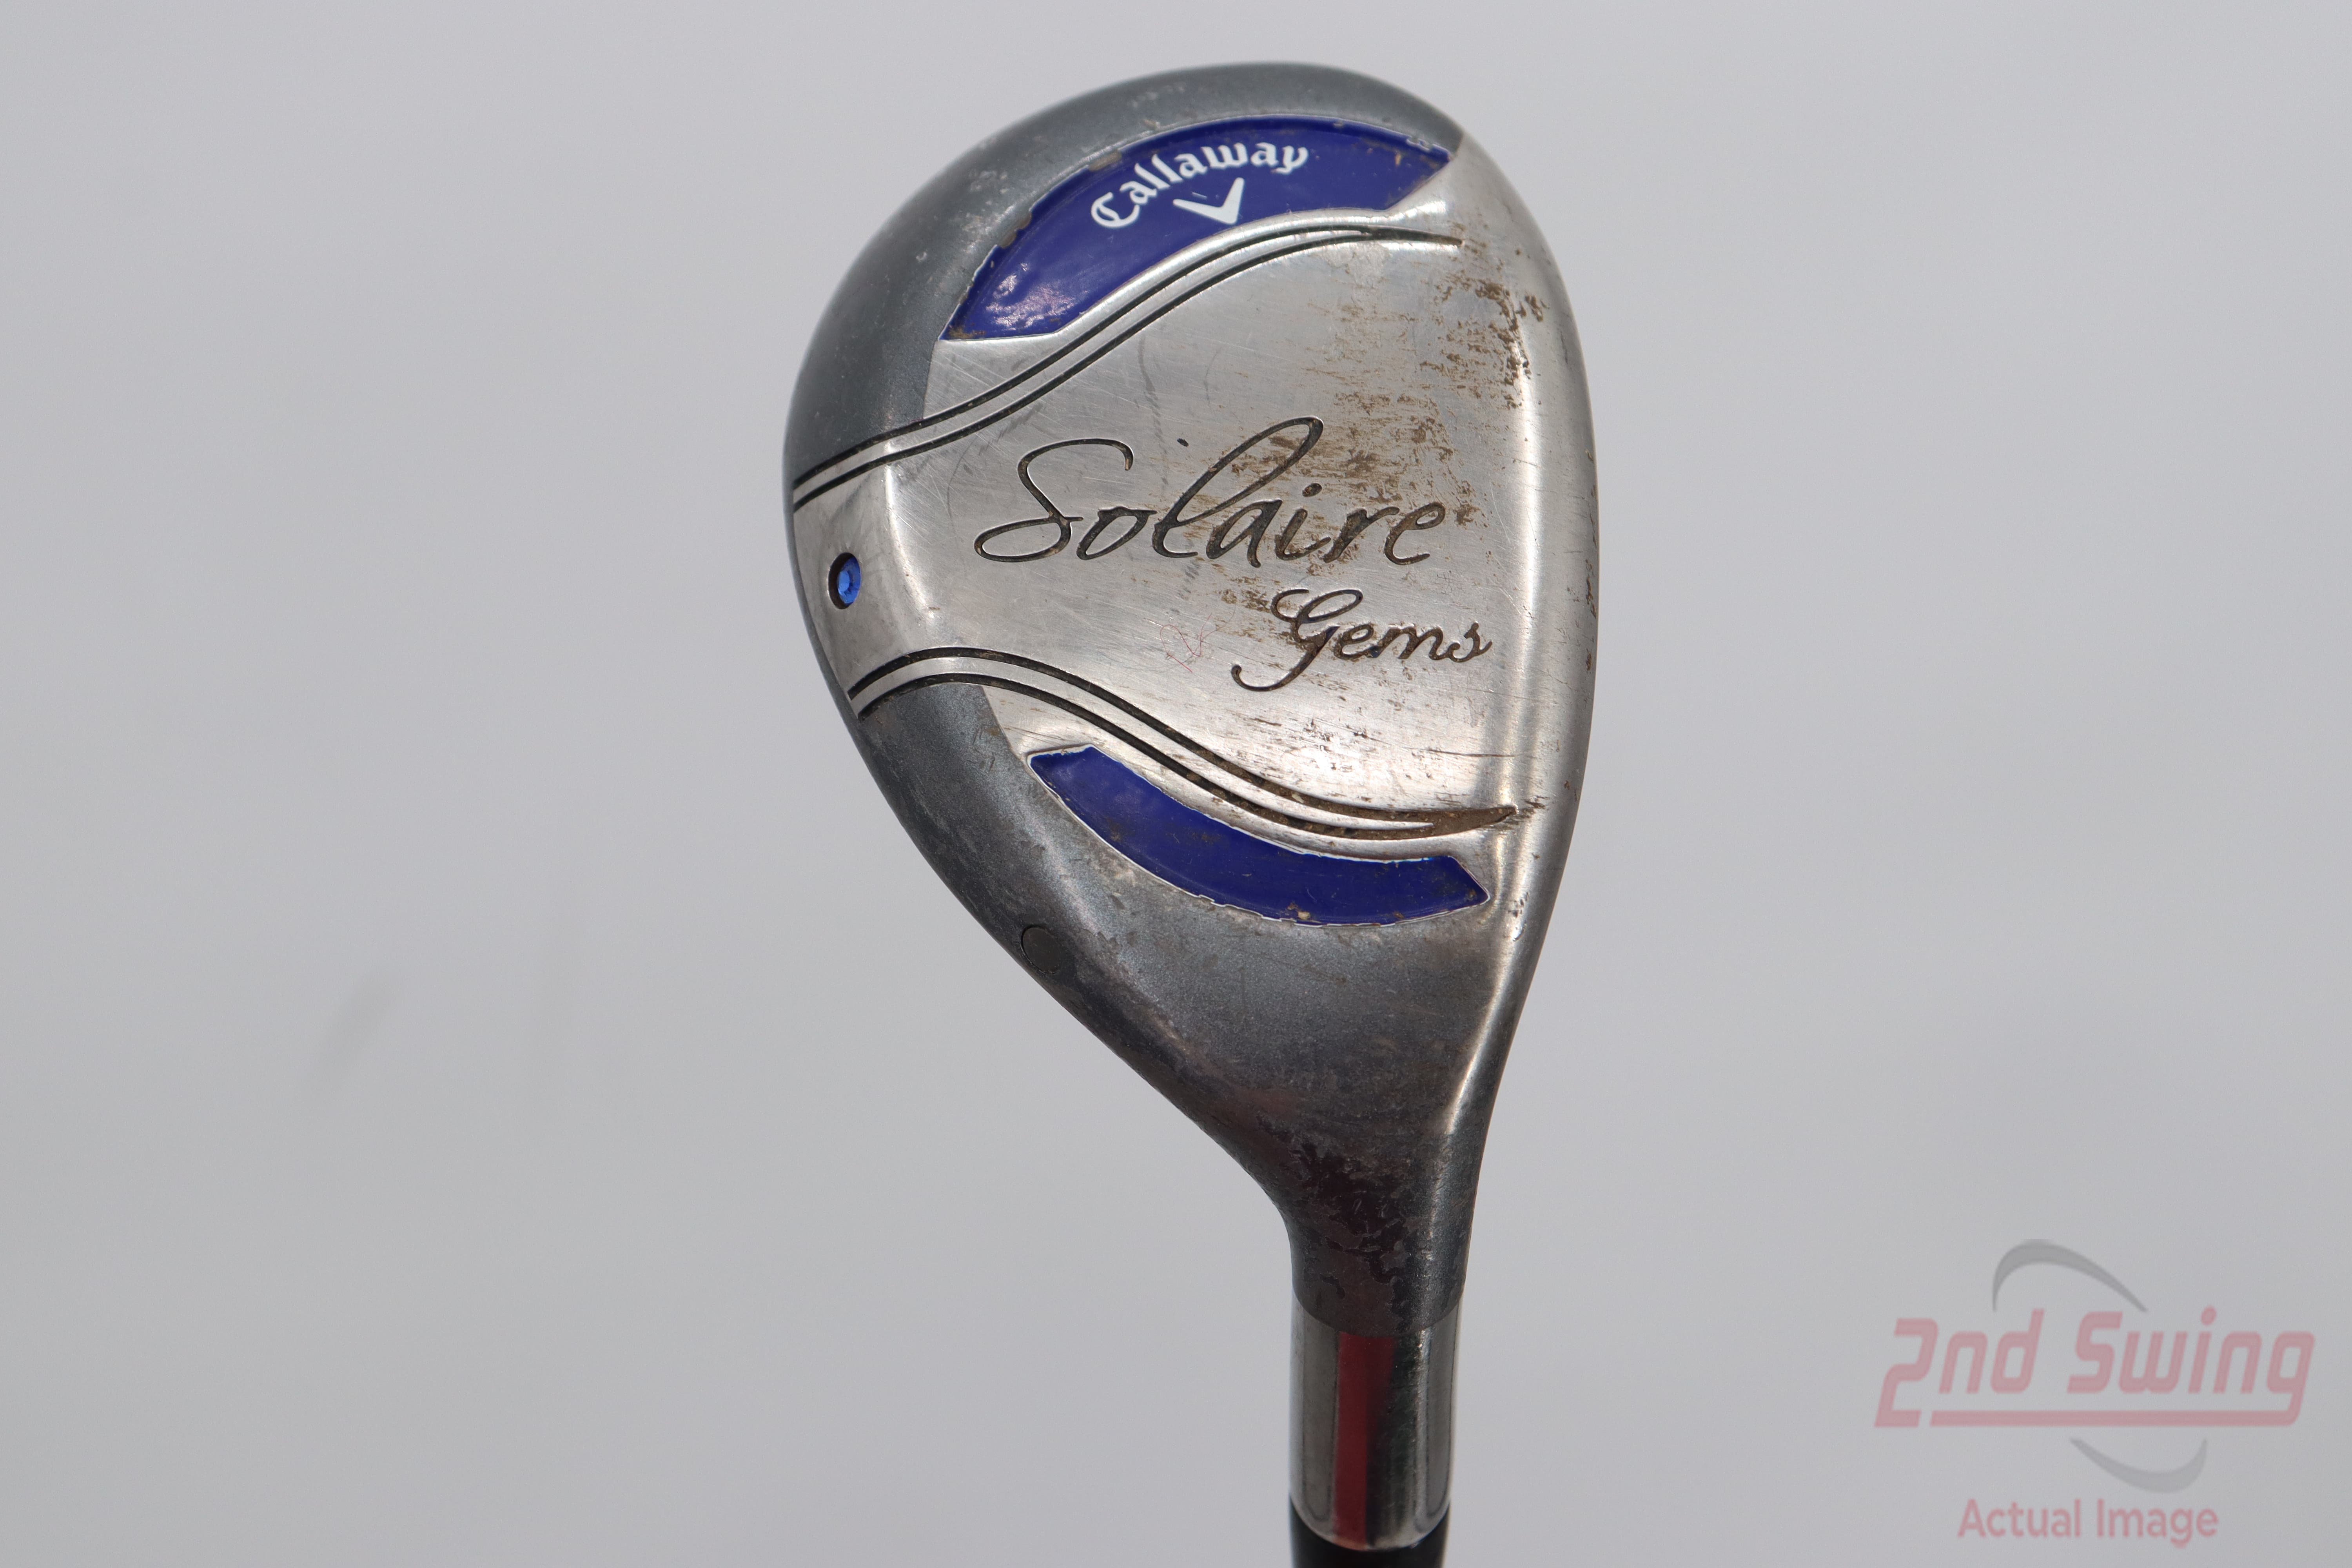 Callaway Solaire Gems Hybrid (X-32329713398) | 2nd Swing Golf